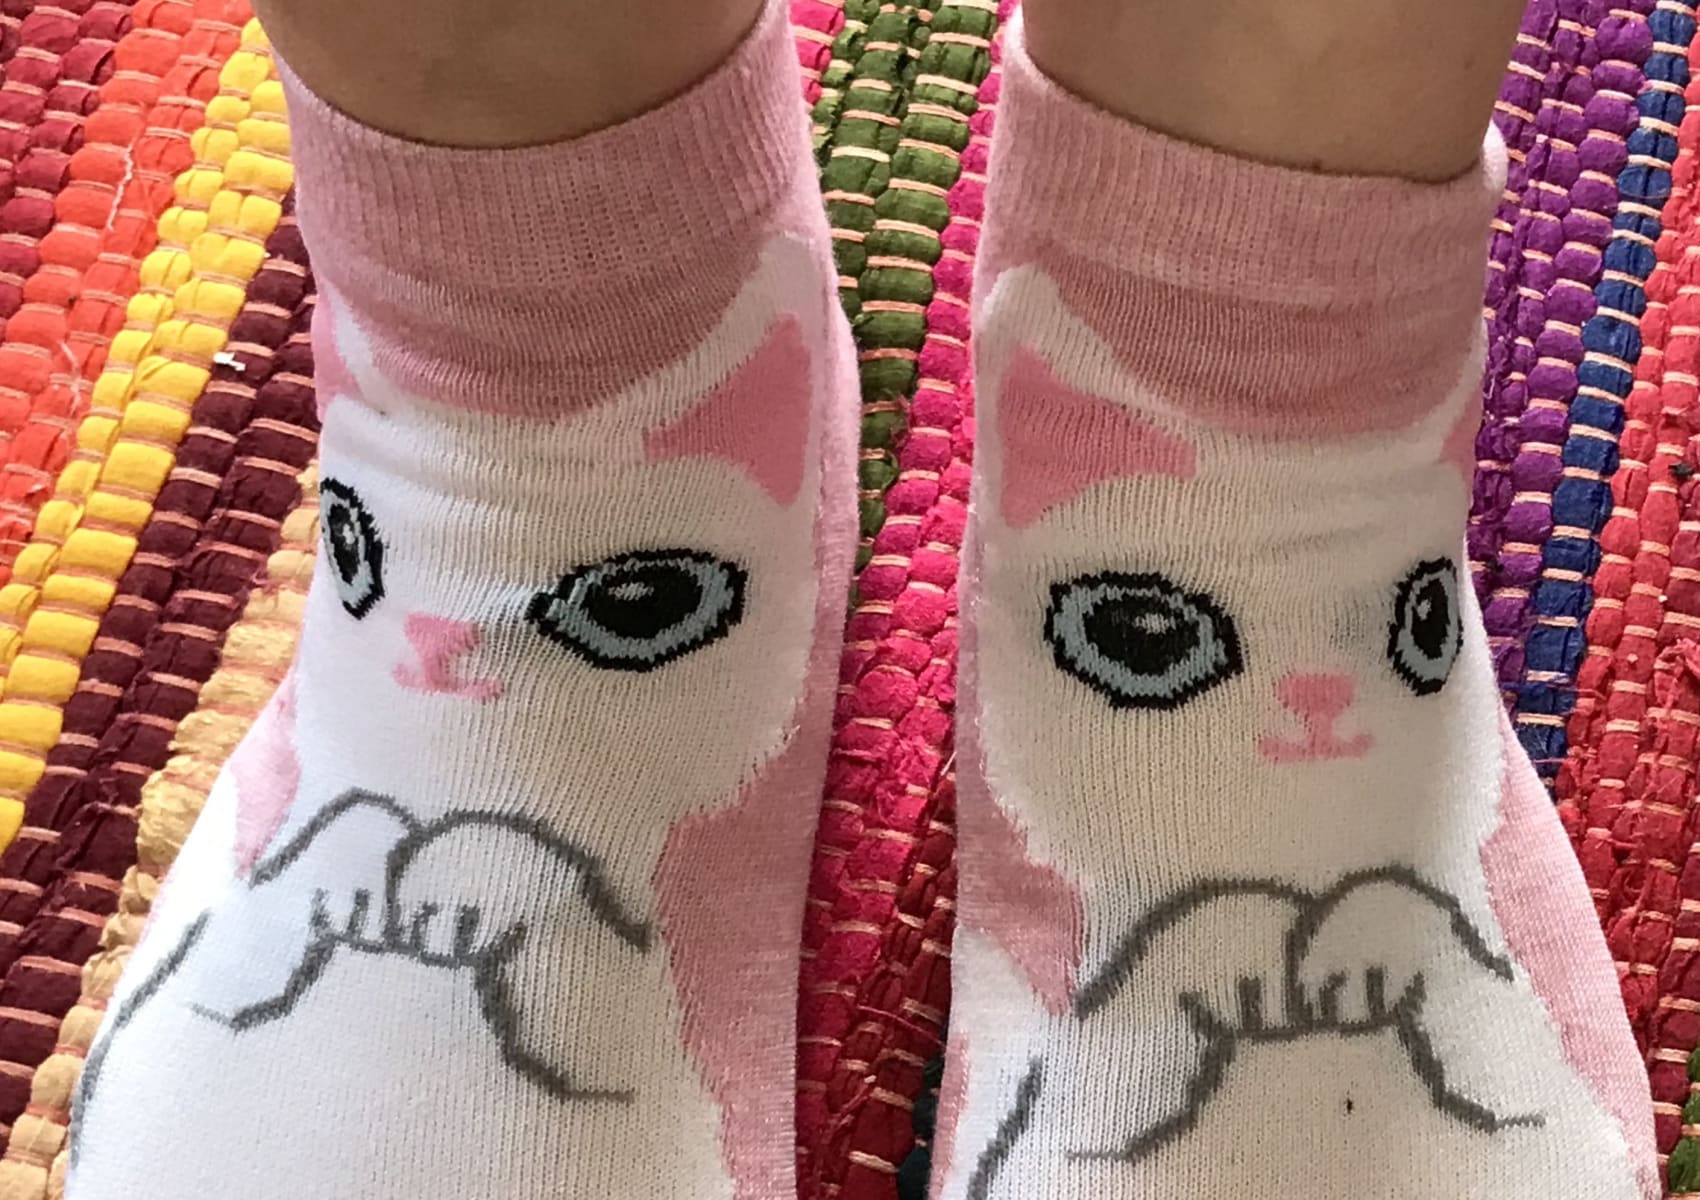 Ladies' pale pink ankle socks with white Turkish Angora cat